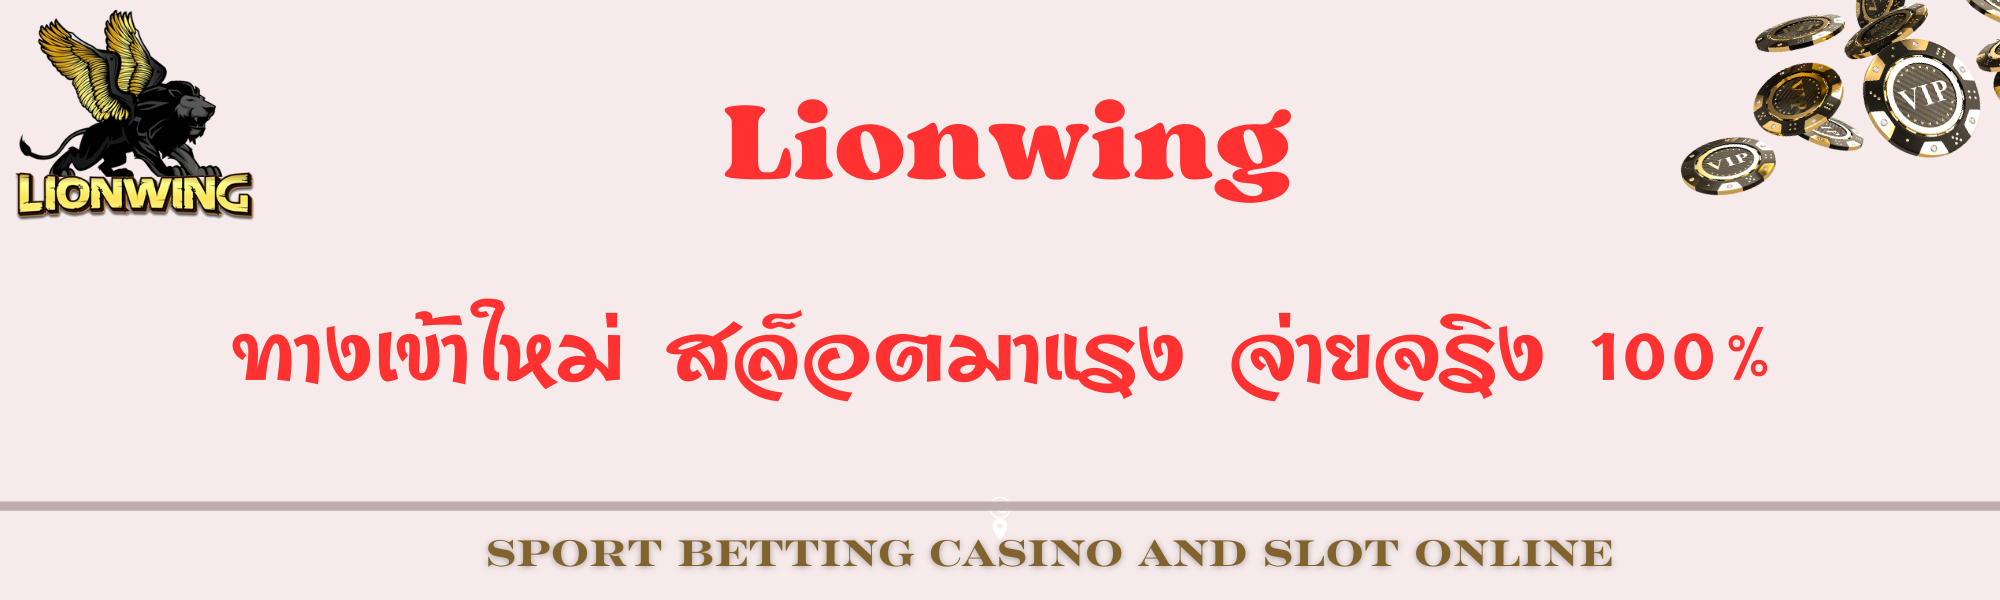 SLOT Lionwing 